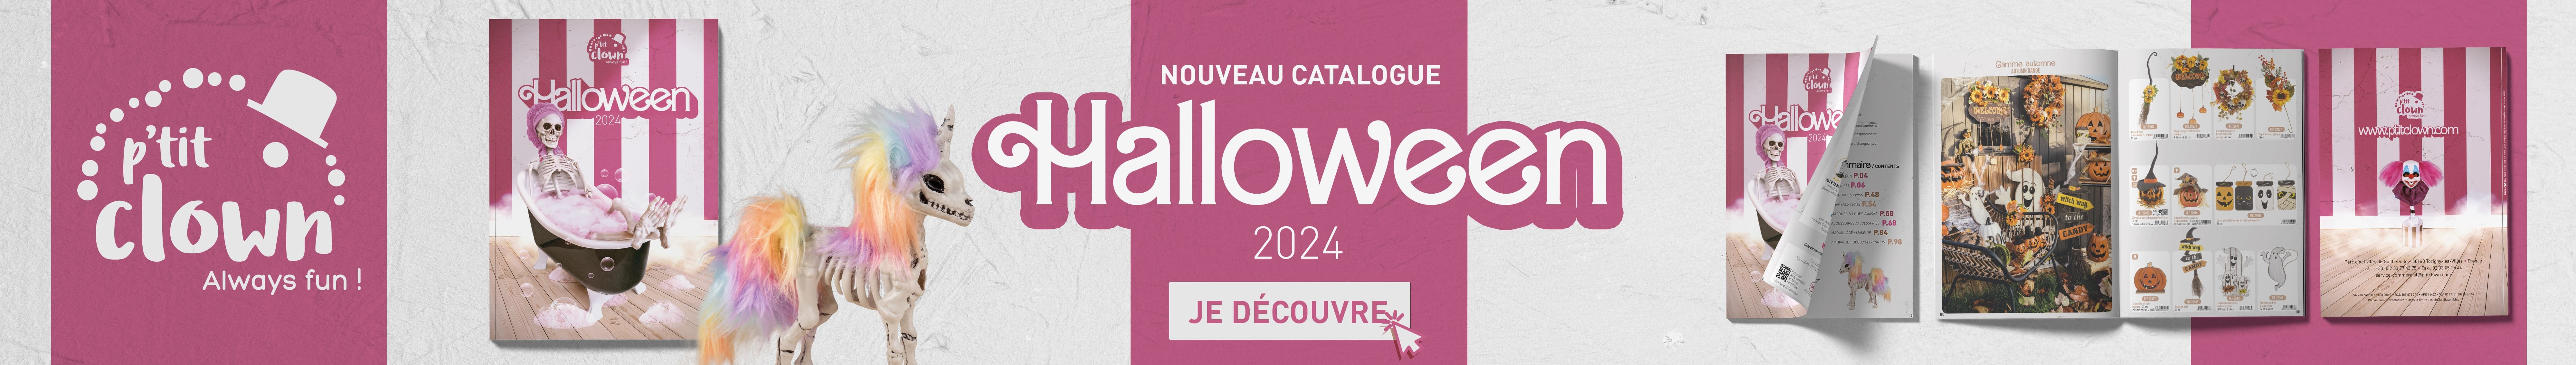 catalog-halloween-2024-5 (1)